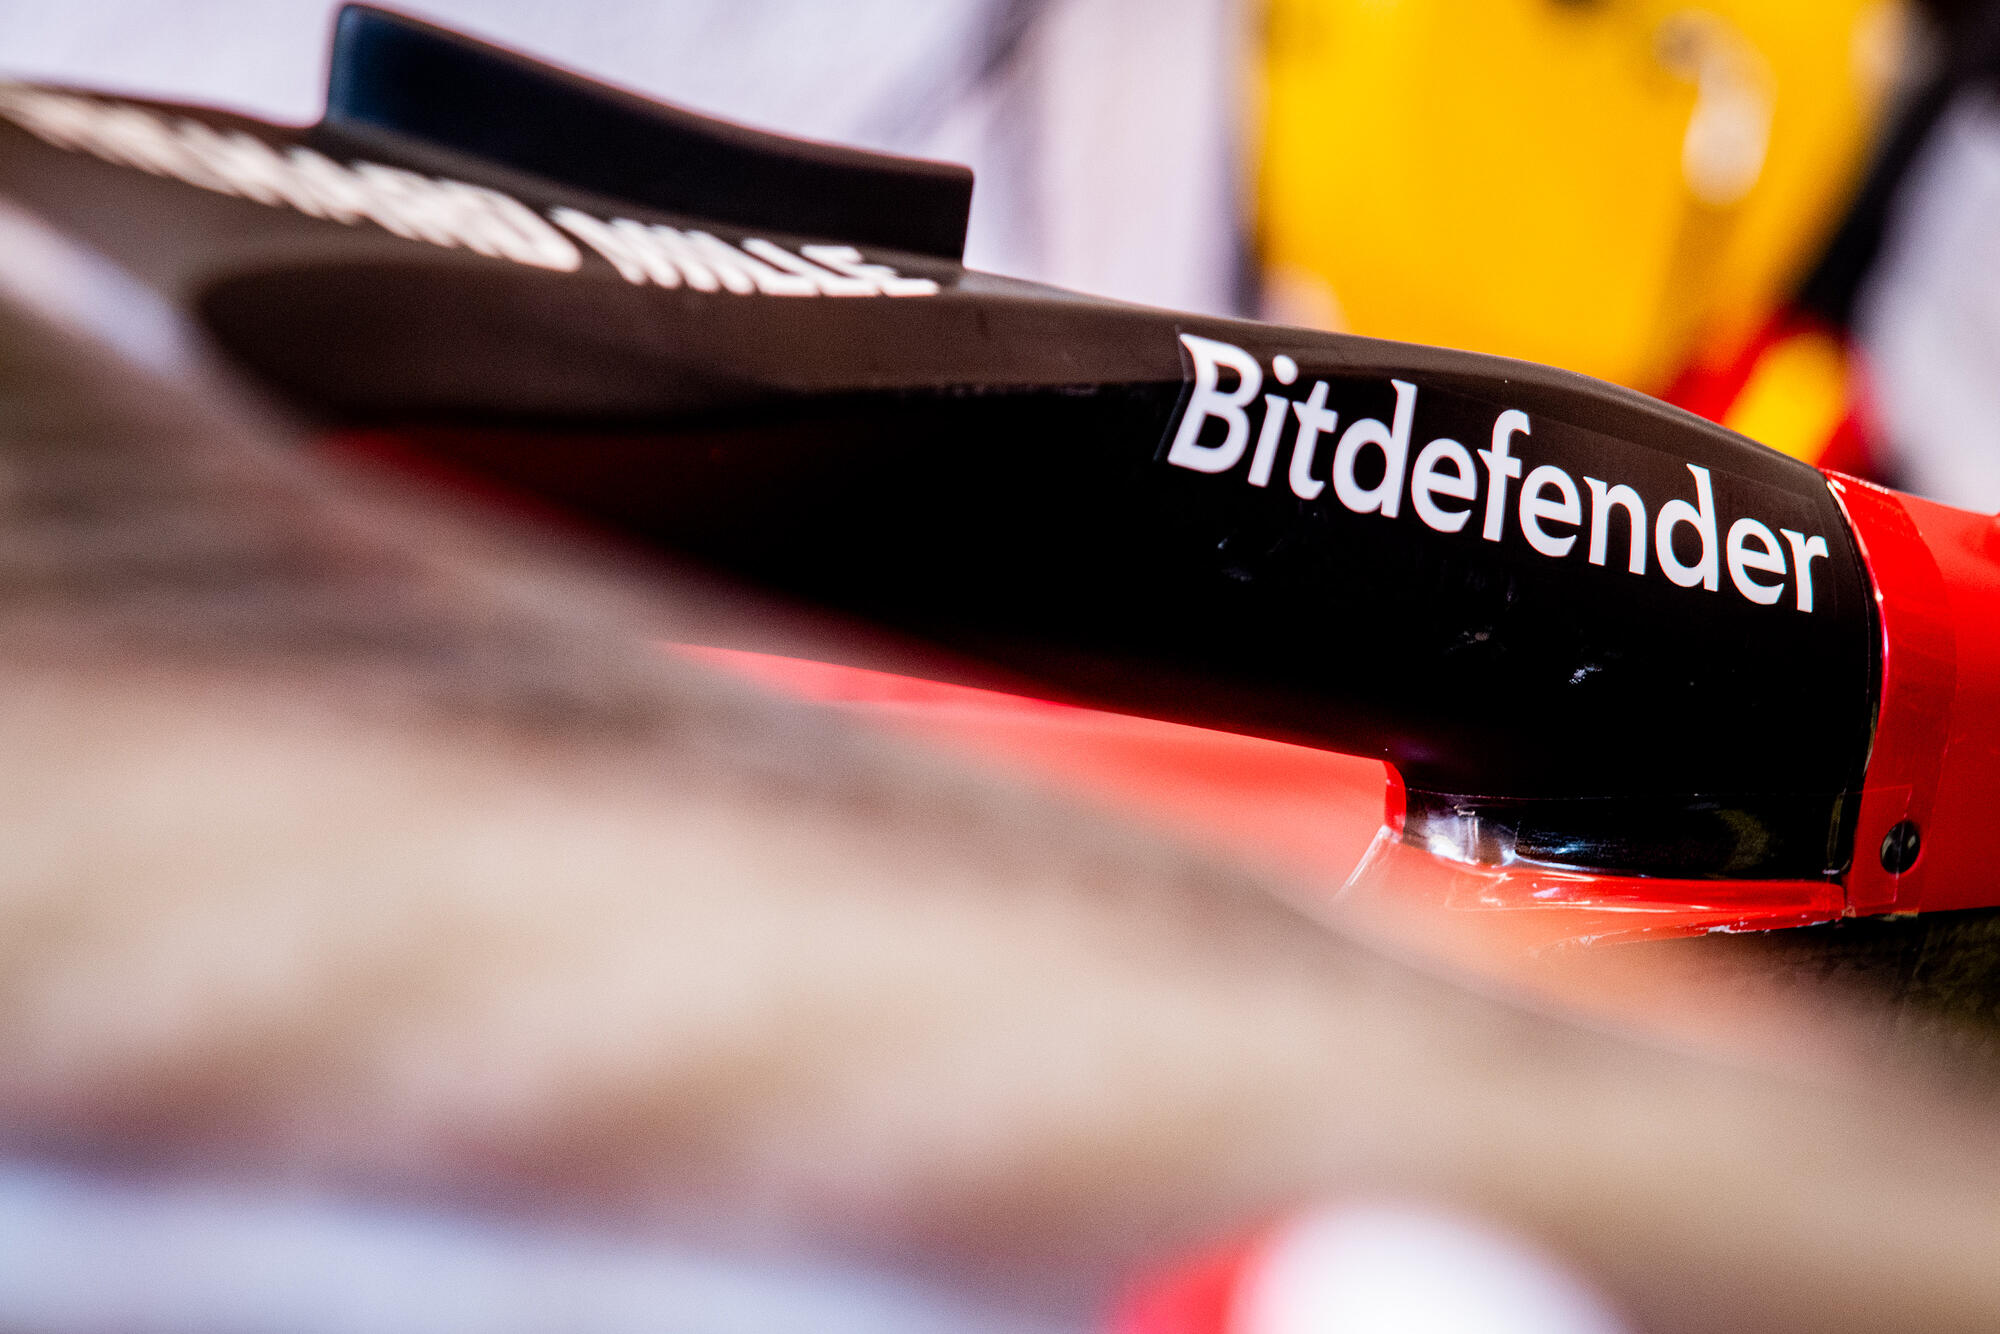 Bitdefender-Ferrari-partnership-4